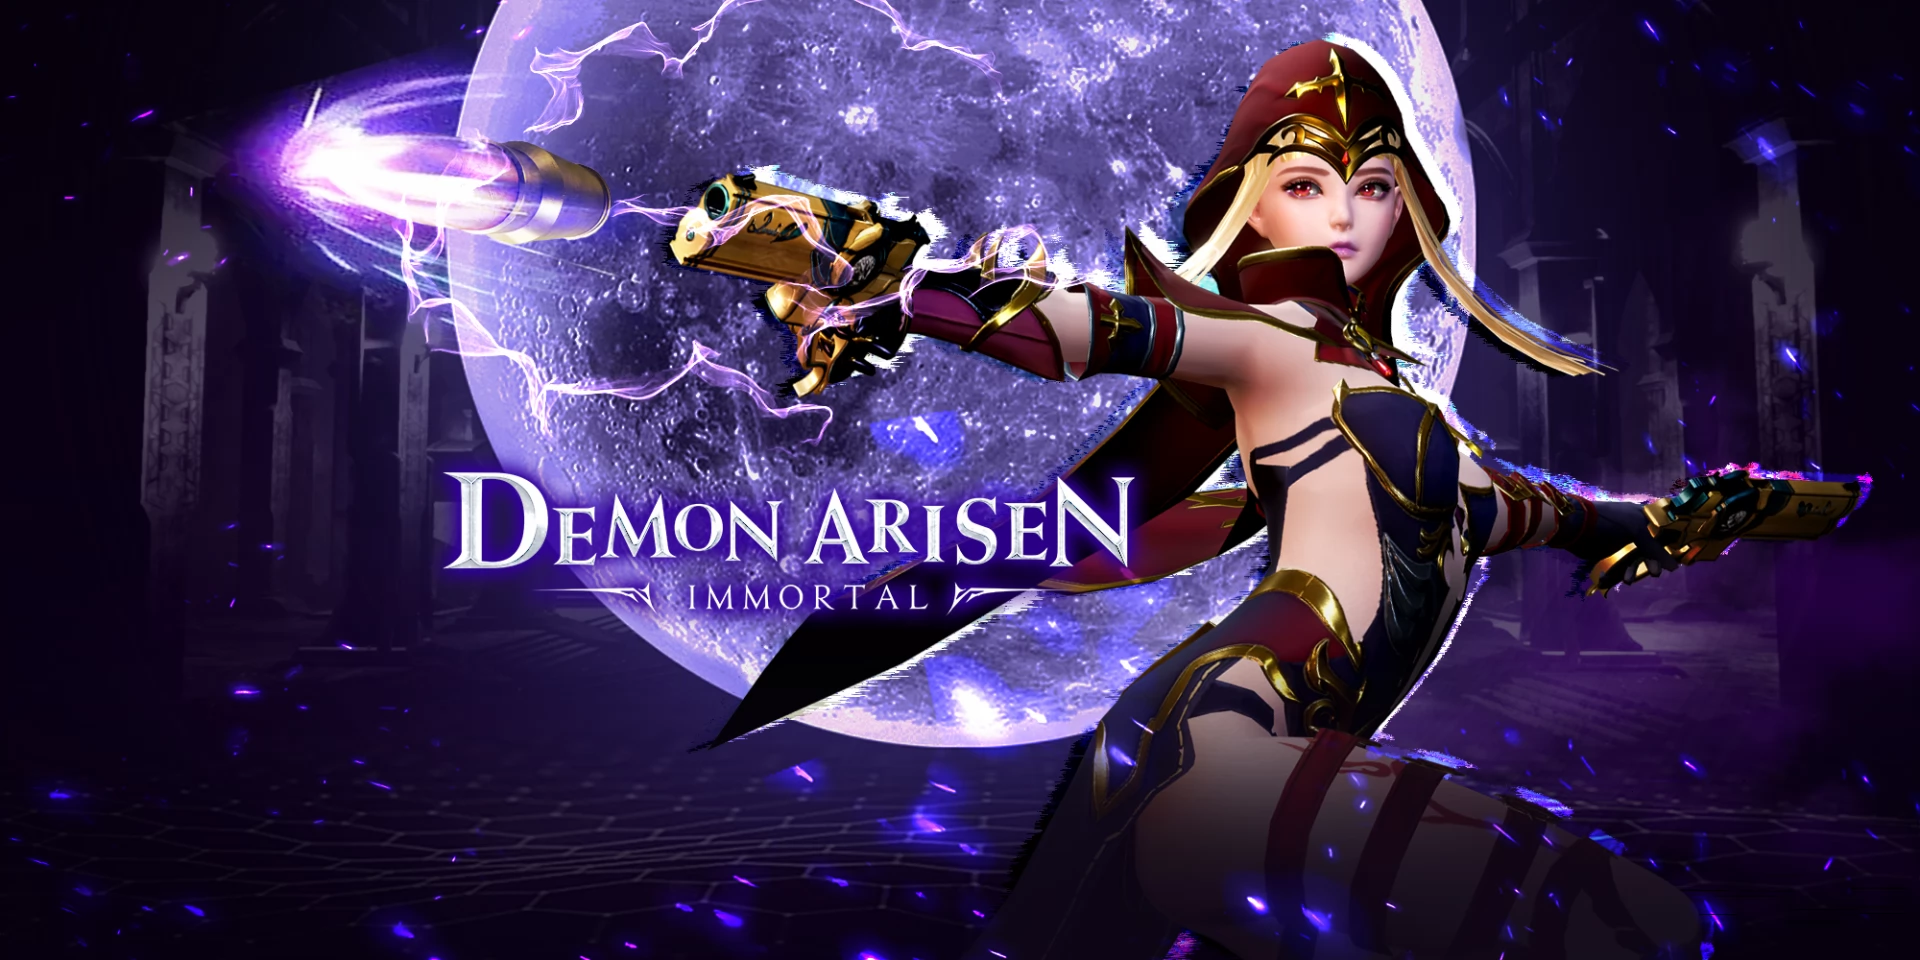 Immortal Demon: Darkness - All Working Redeem Codes November 2023